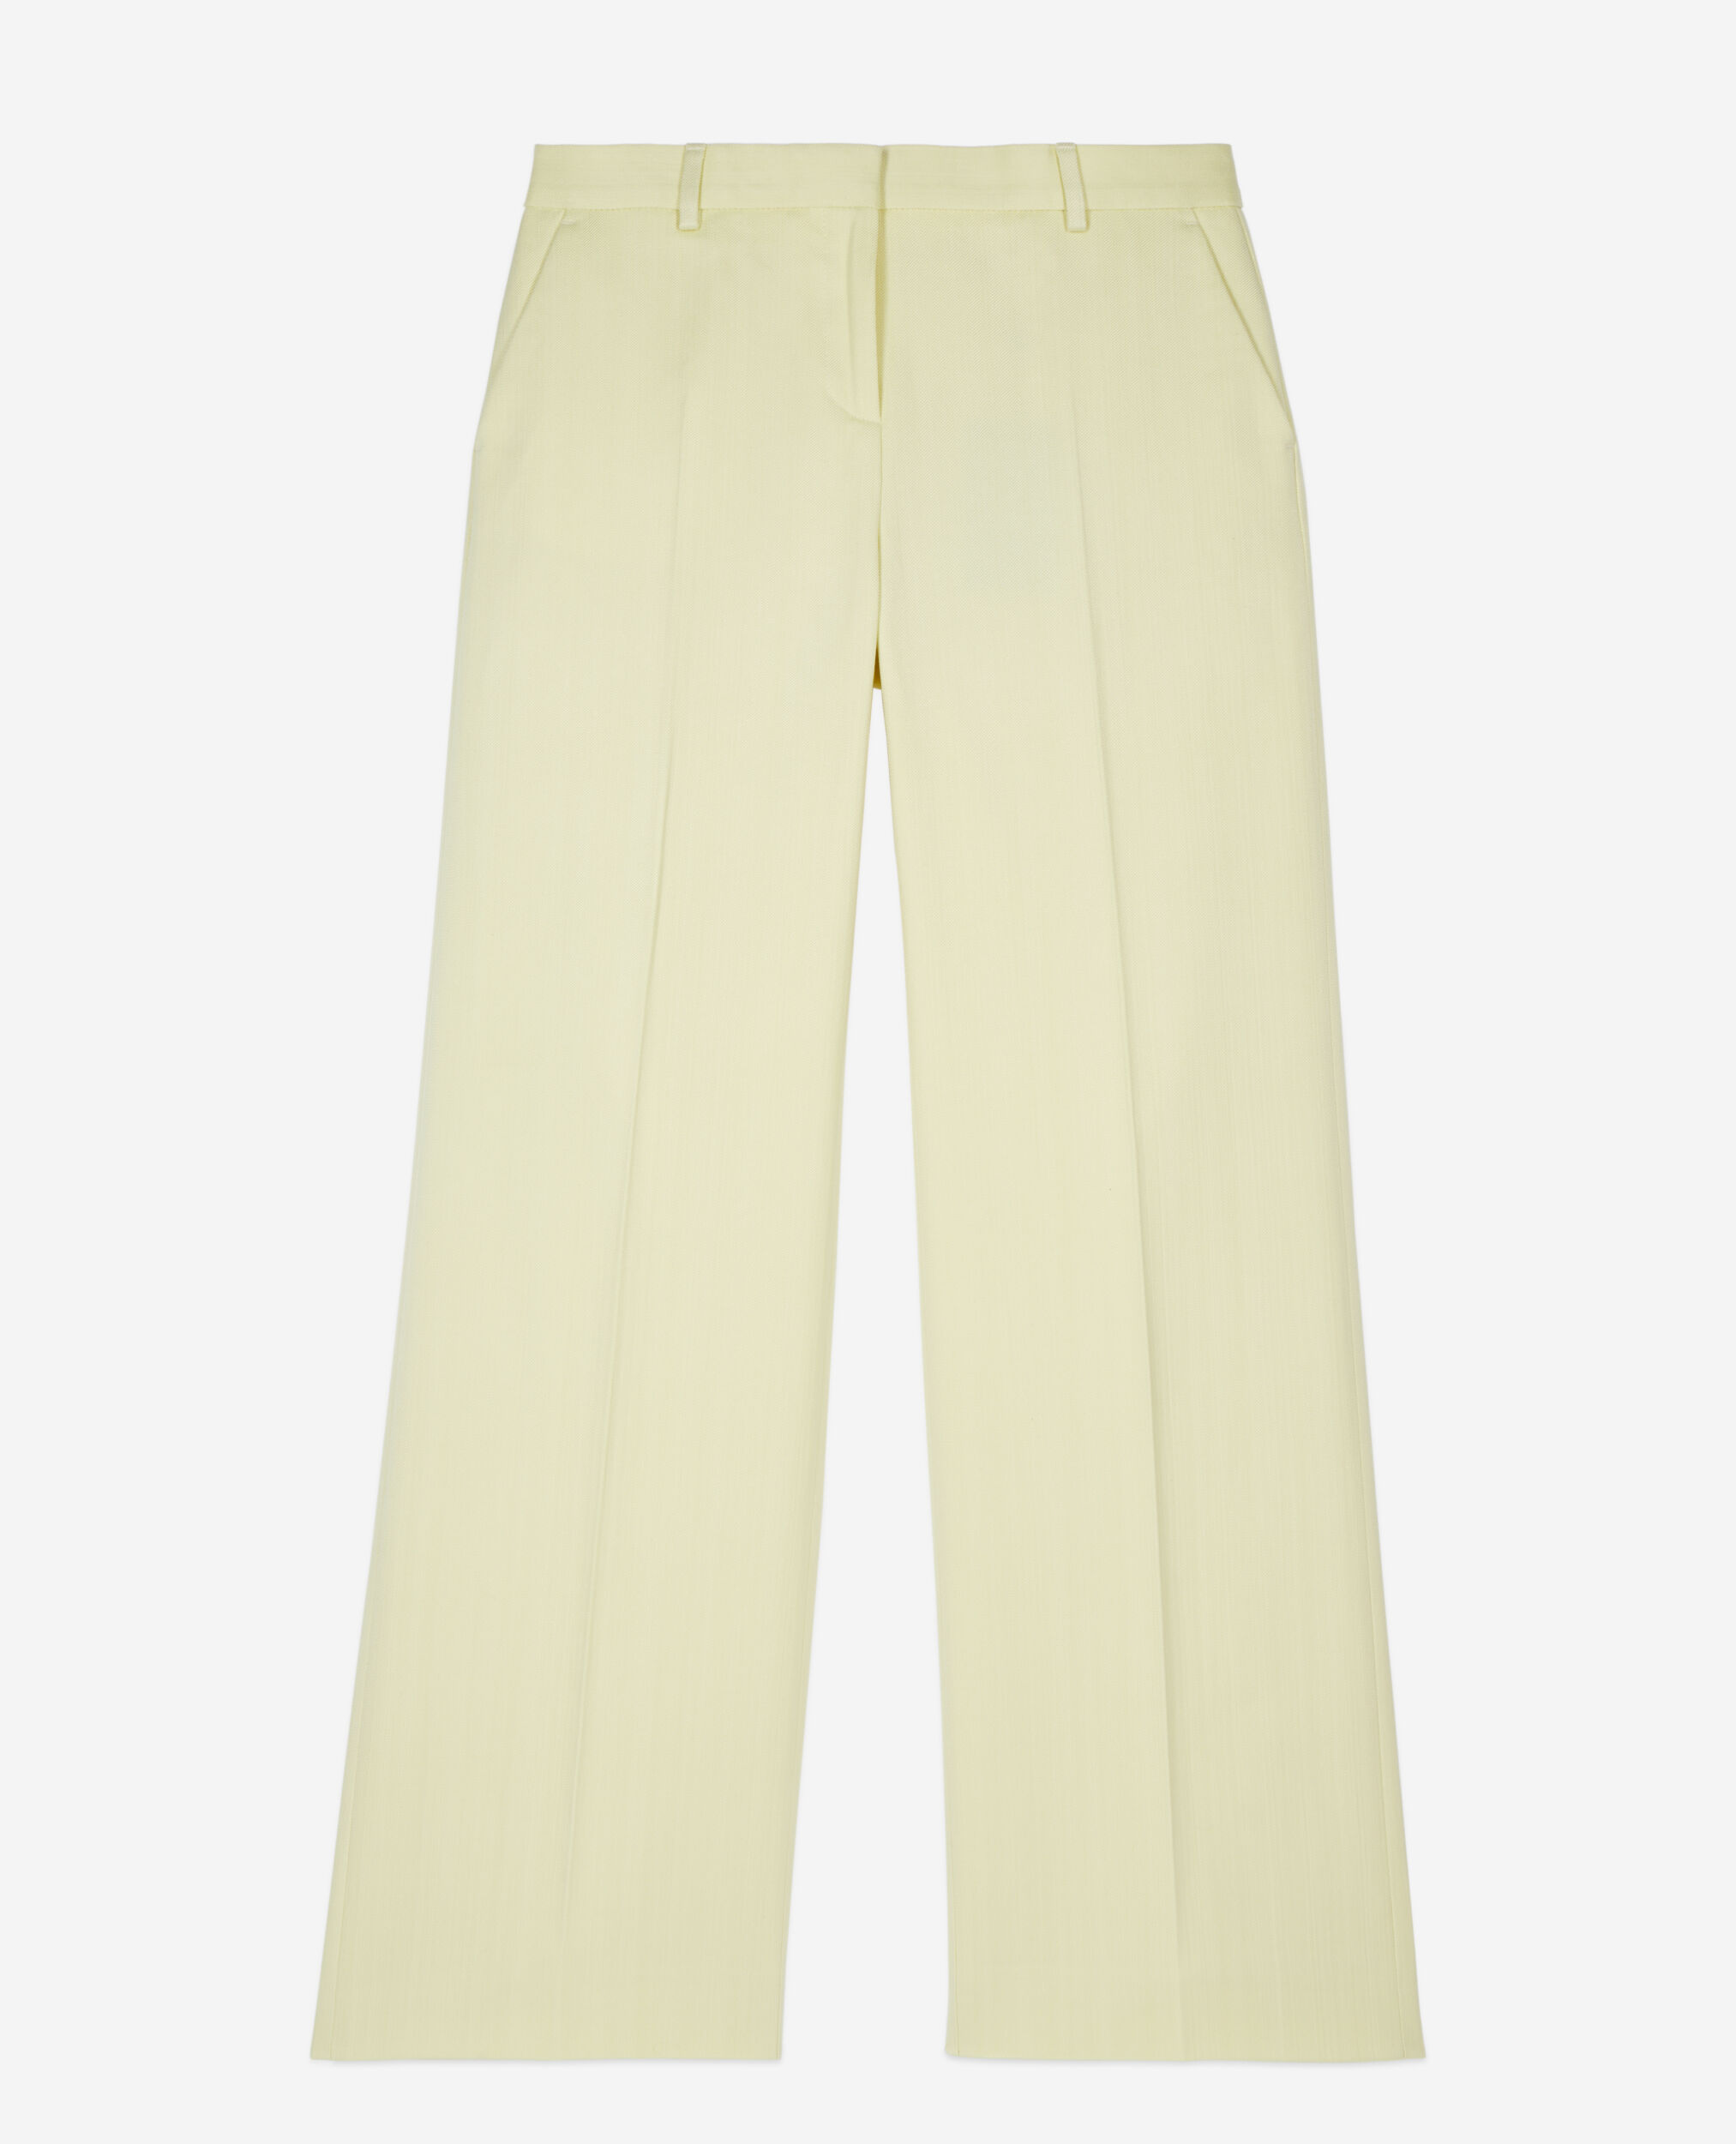 Pantalon tailleur jaune clair, BRIGHT YELLOW, hi-res image number null